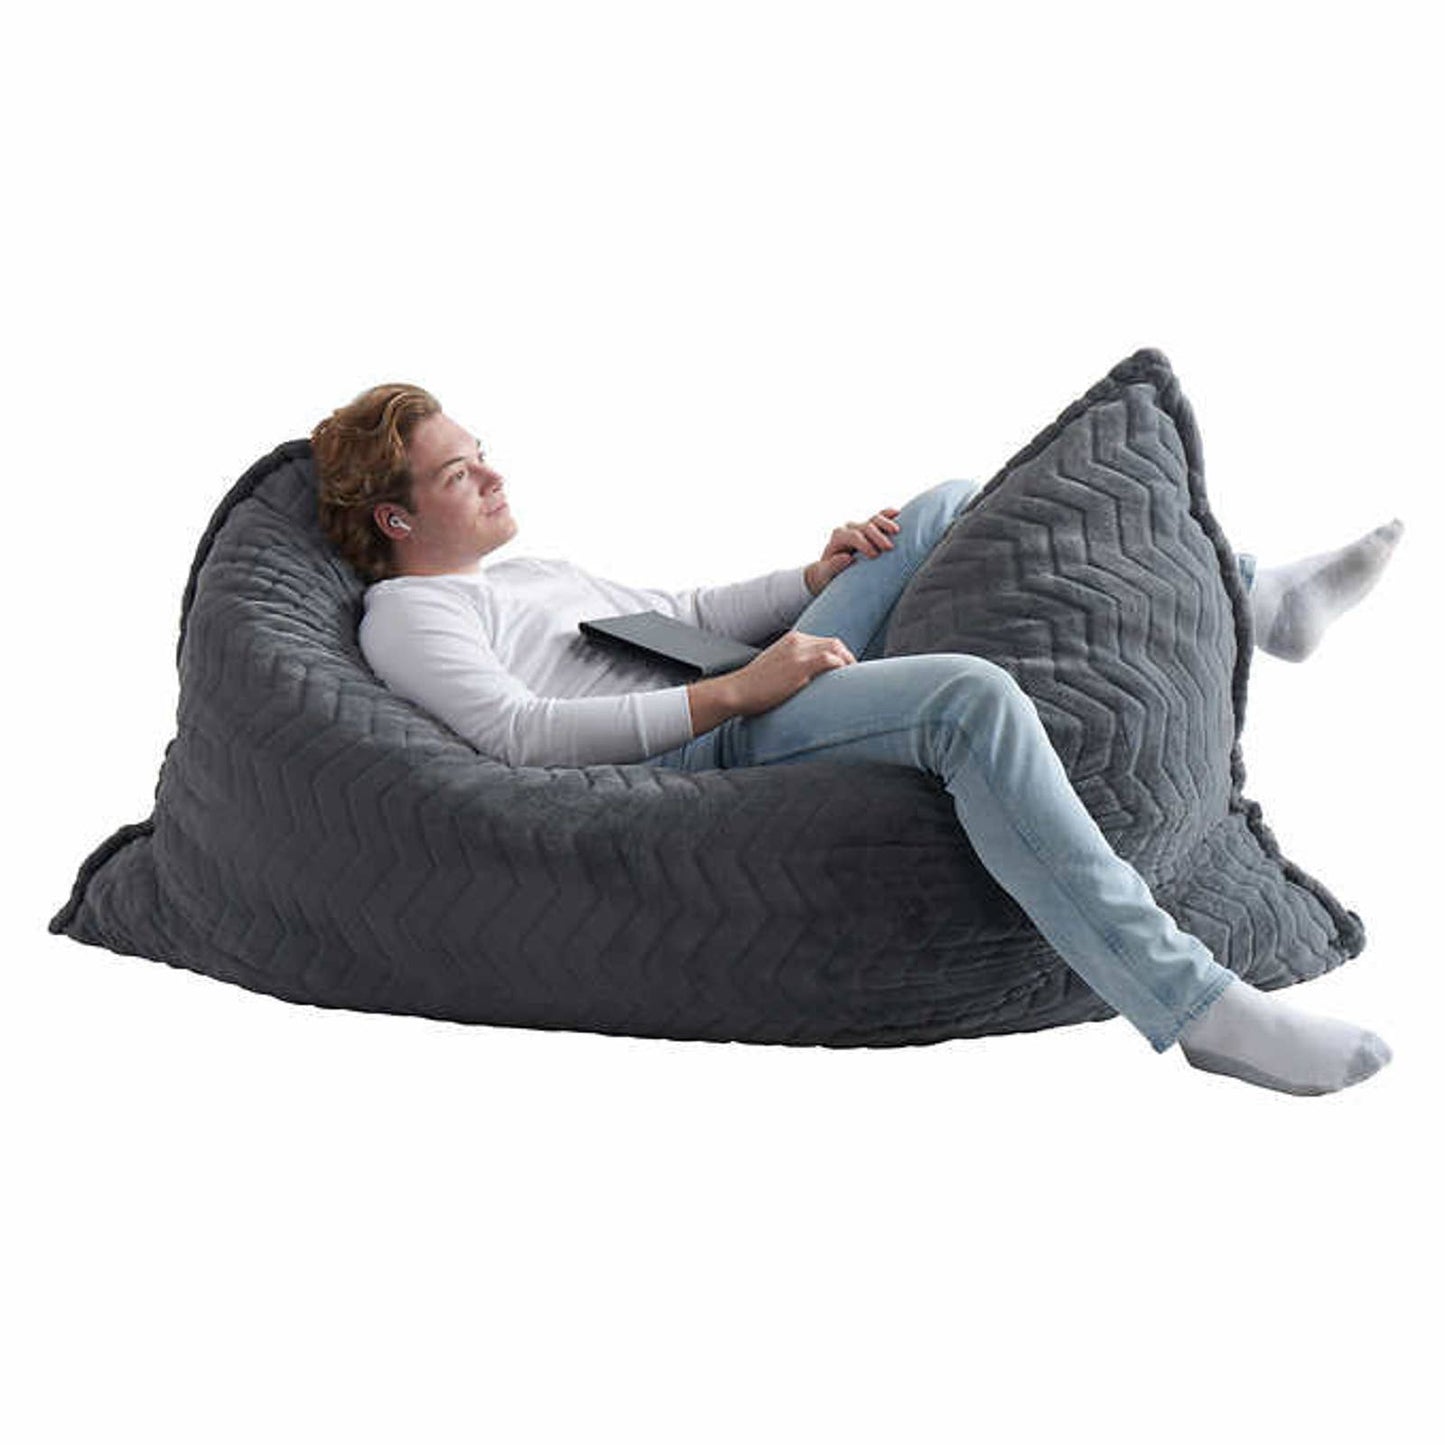 Costco - Lounge & Co Crash Foam Pillow - Retail $149